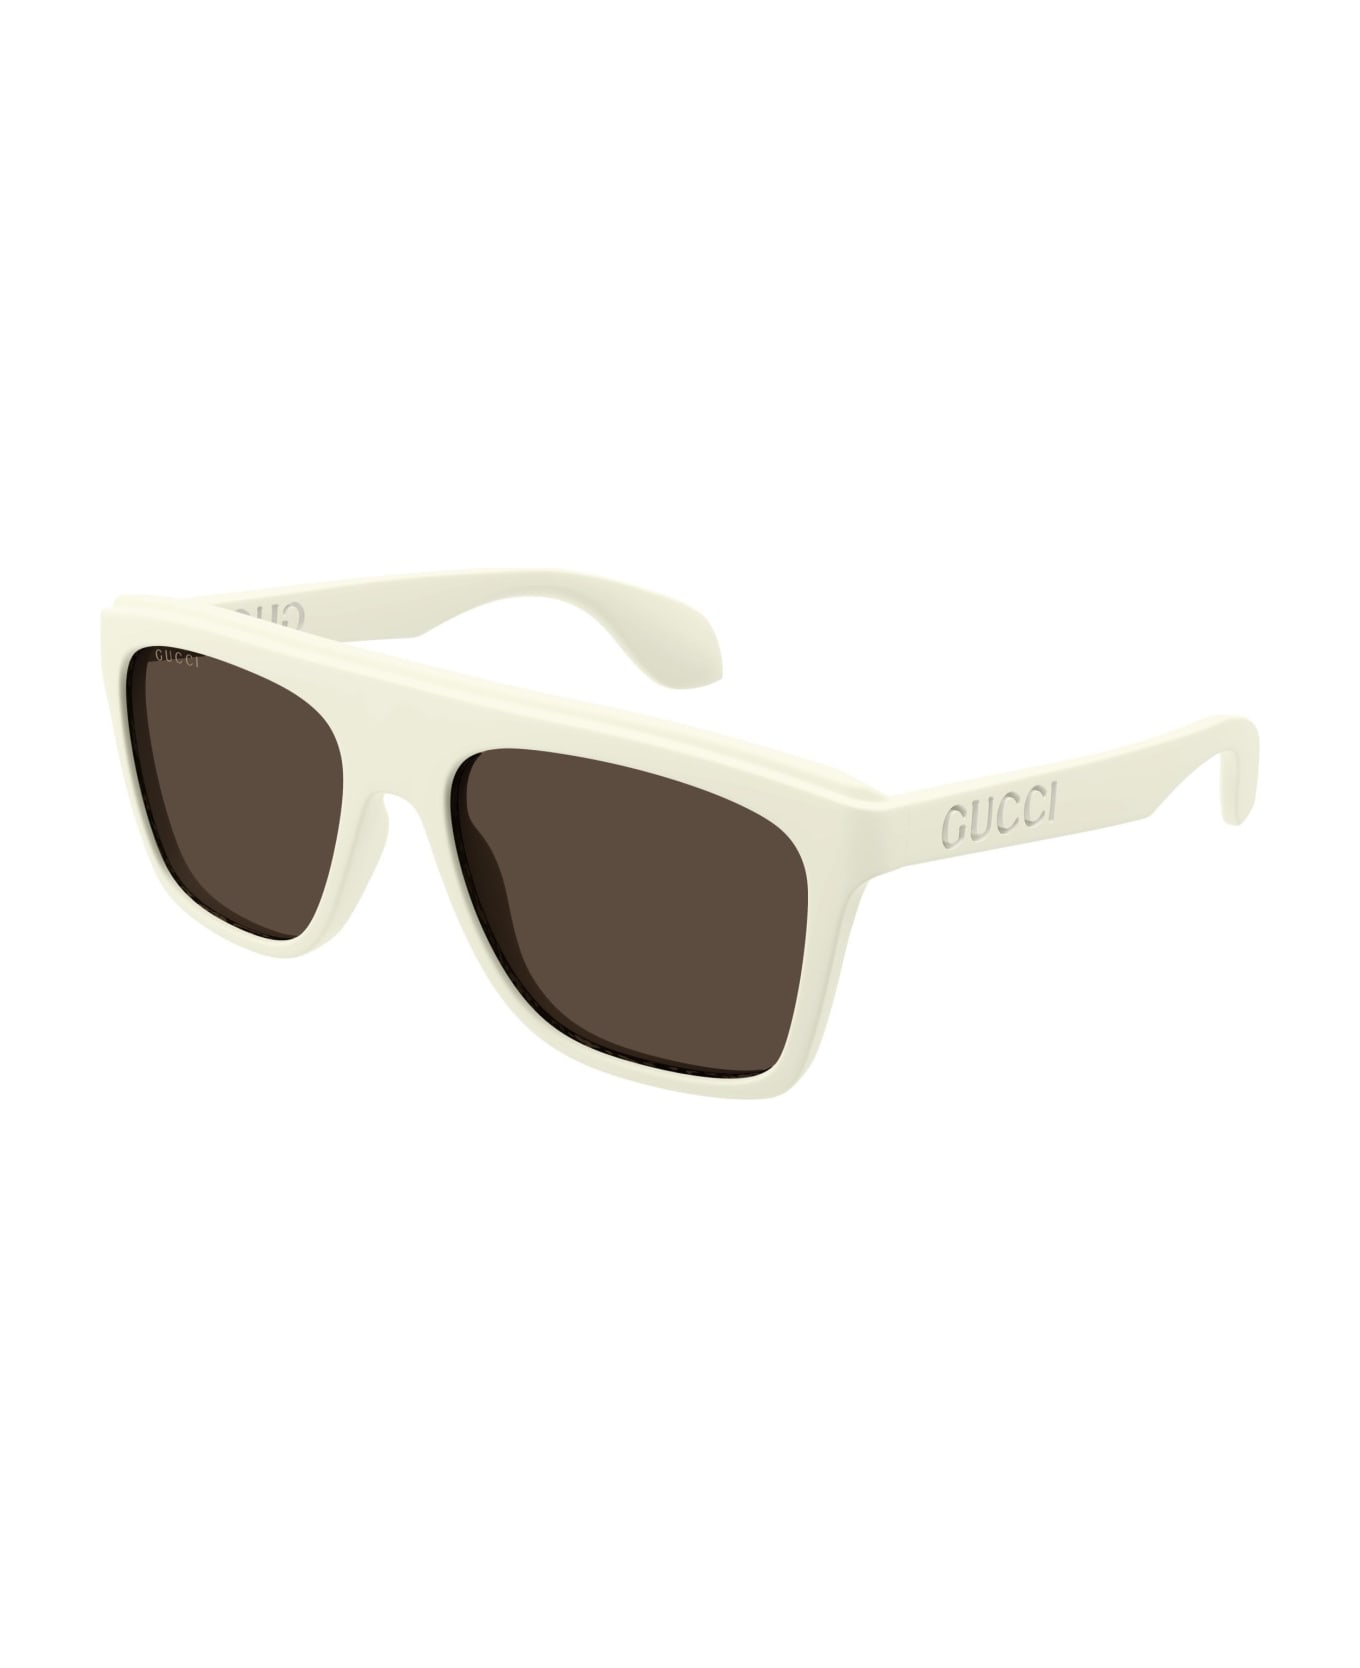 Gucci Eyewear Sunglasses - Avorio/Marrone サングラス